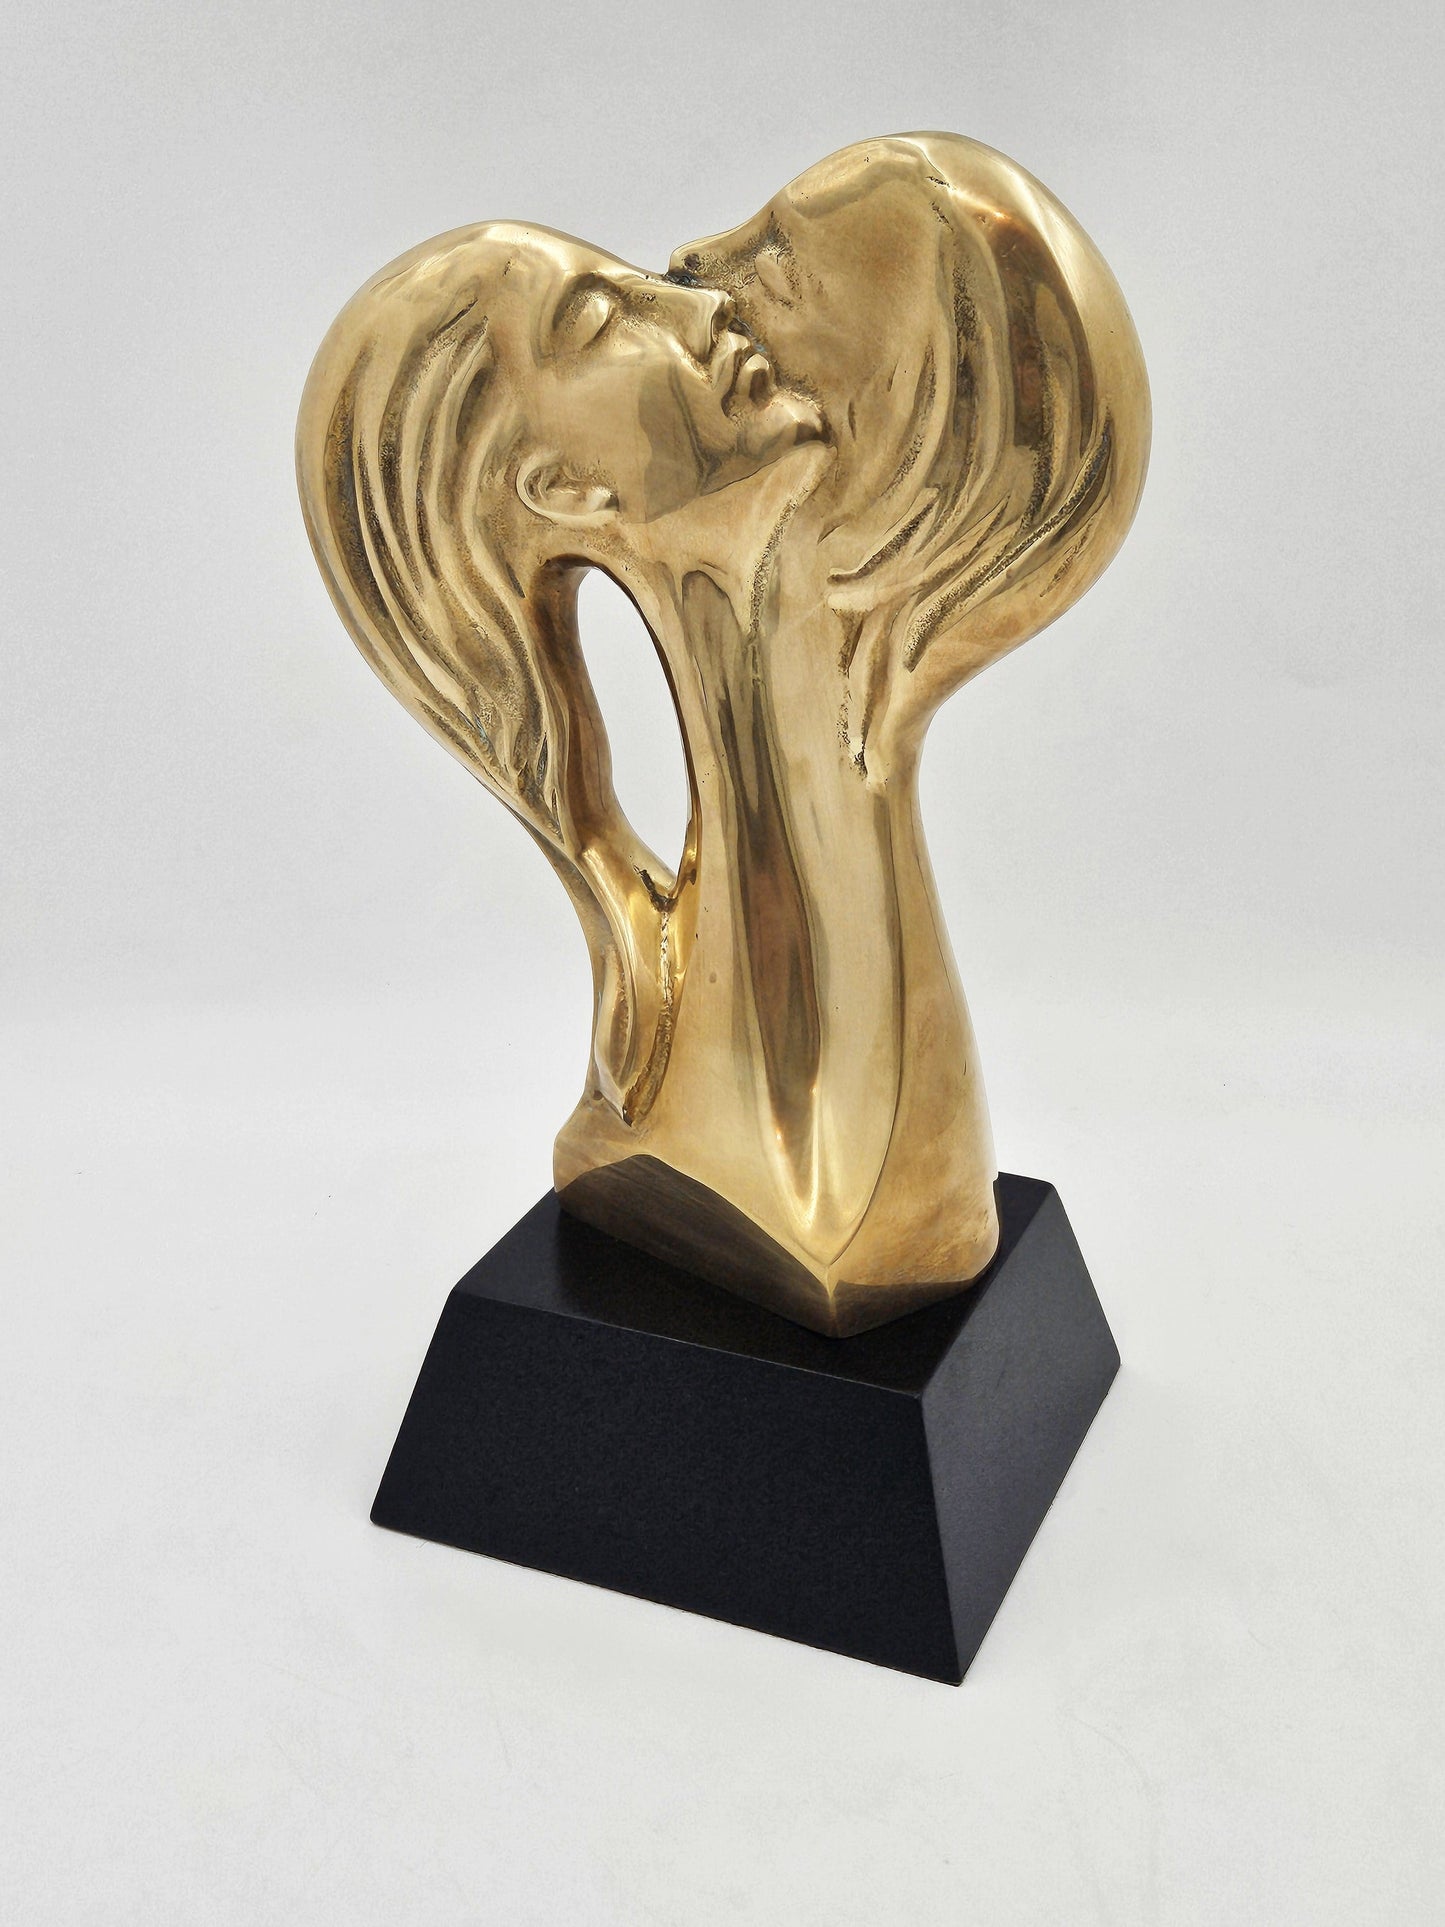 Austin Productions Sculpture Austin Prod BRASS Sculpture "Faces of Love" Signed Fisher C. 1980